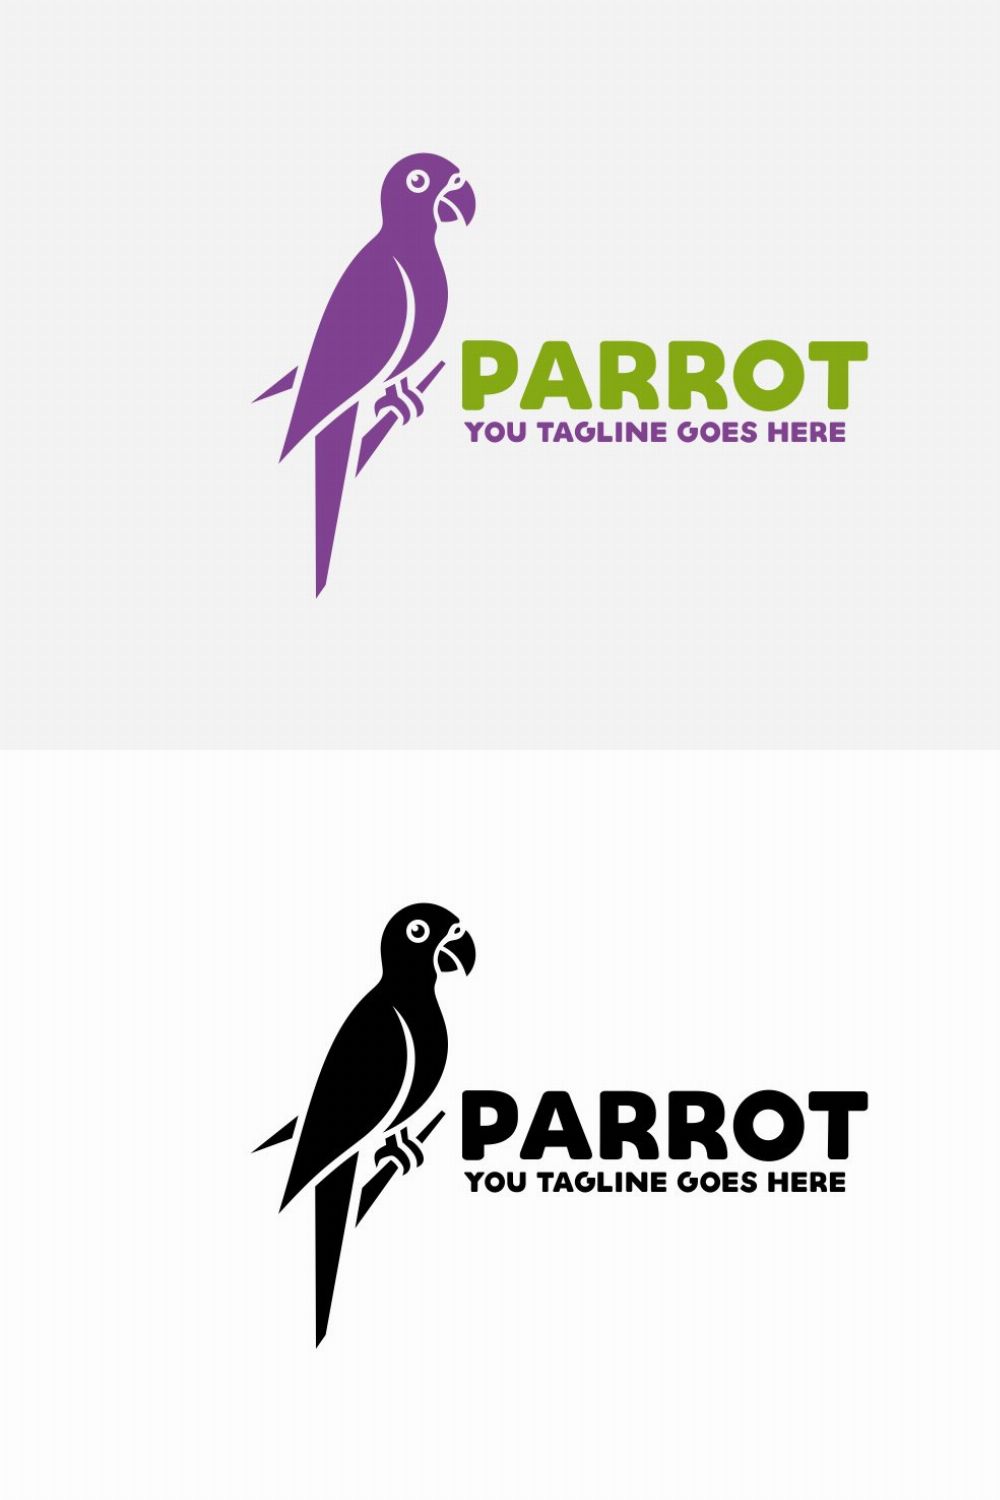 Parrot pinterest preview image.